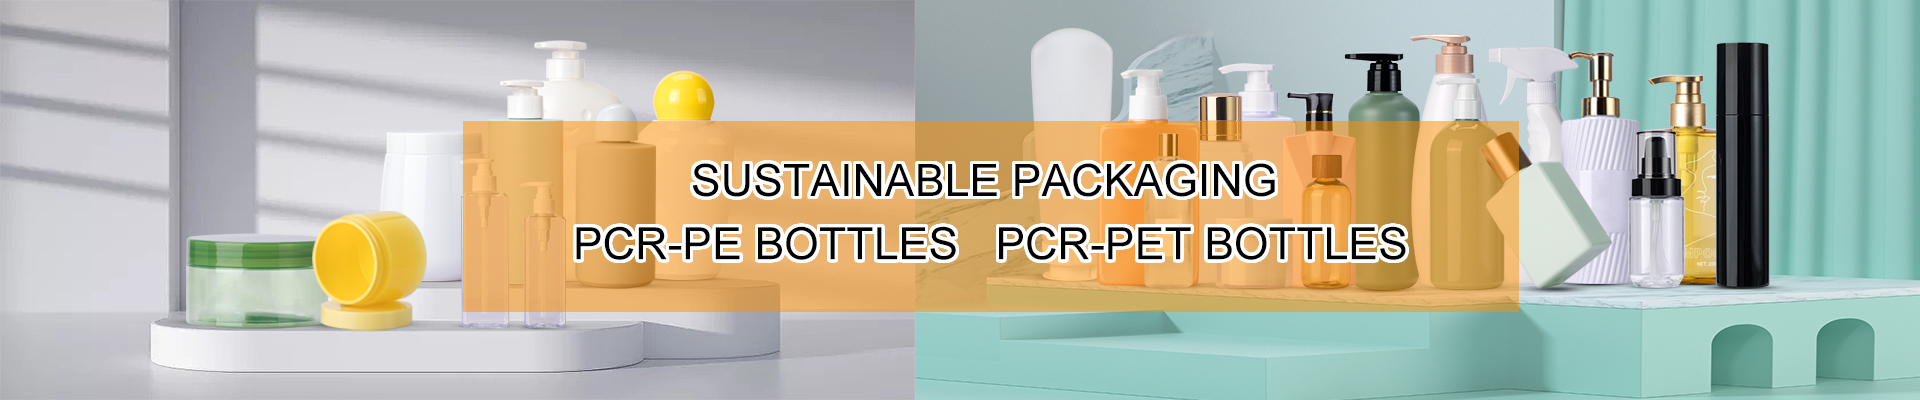 PCR-PET Bottles